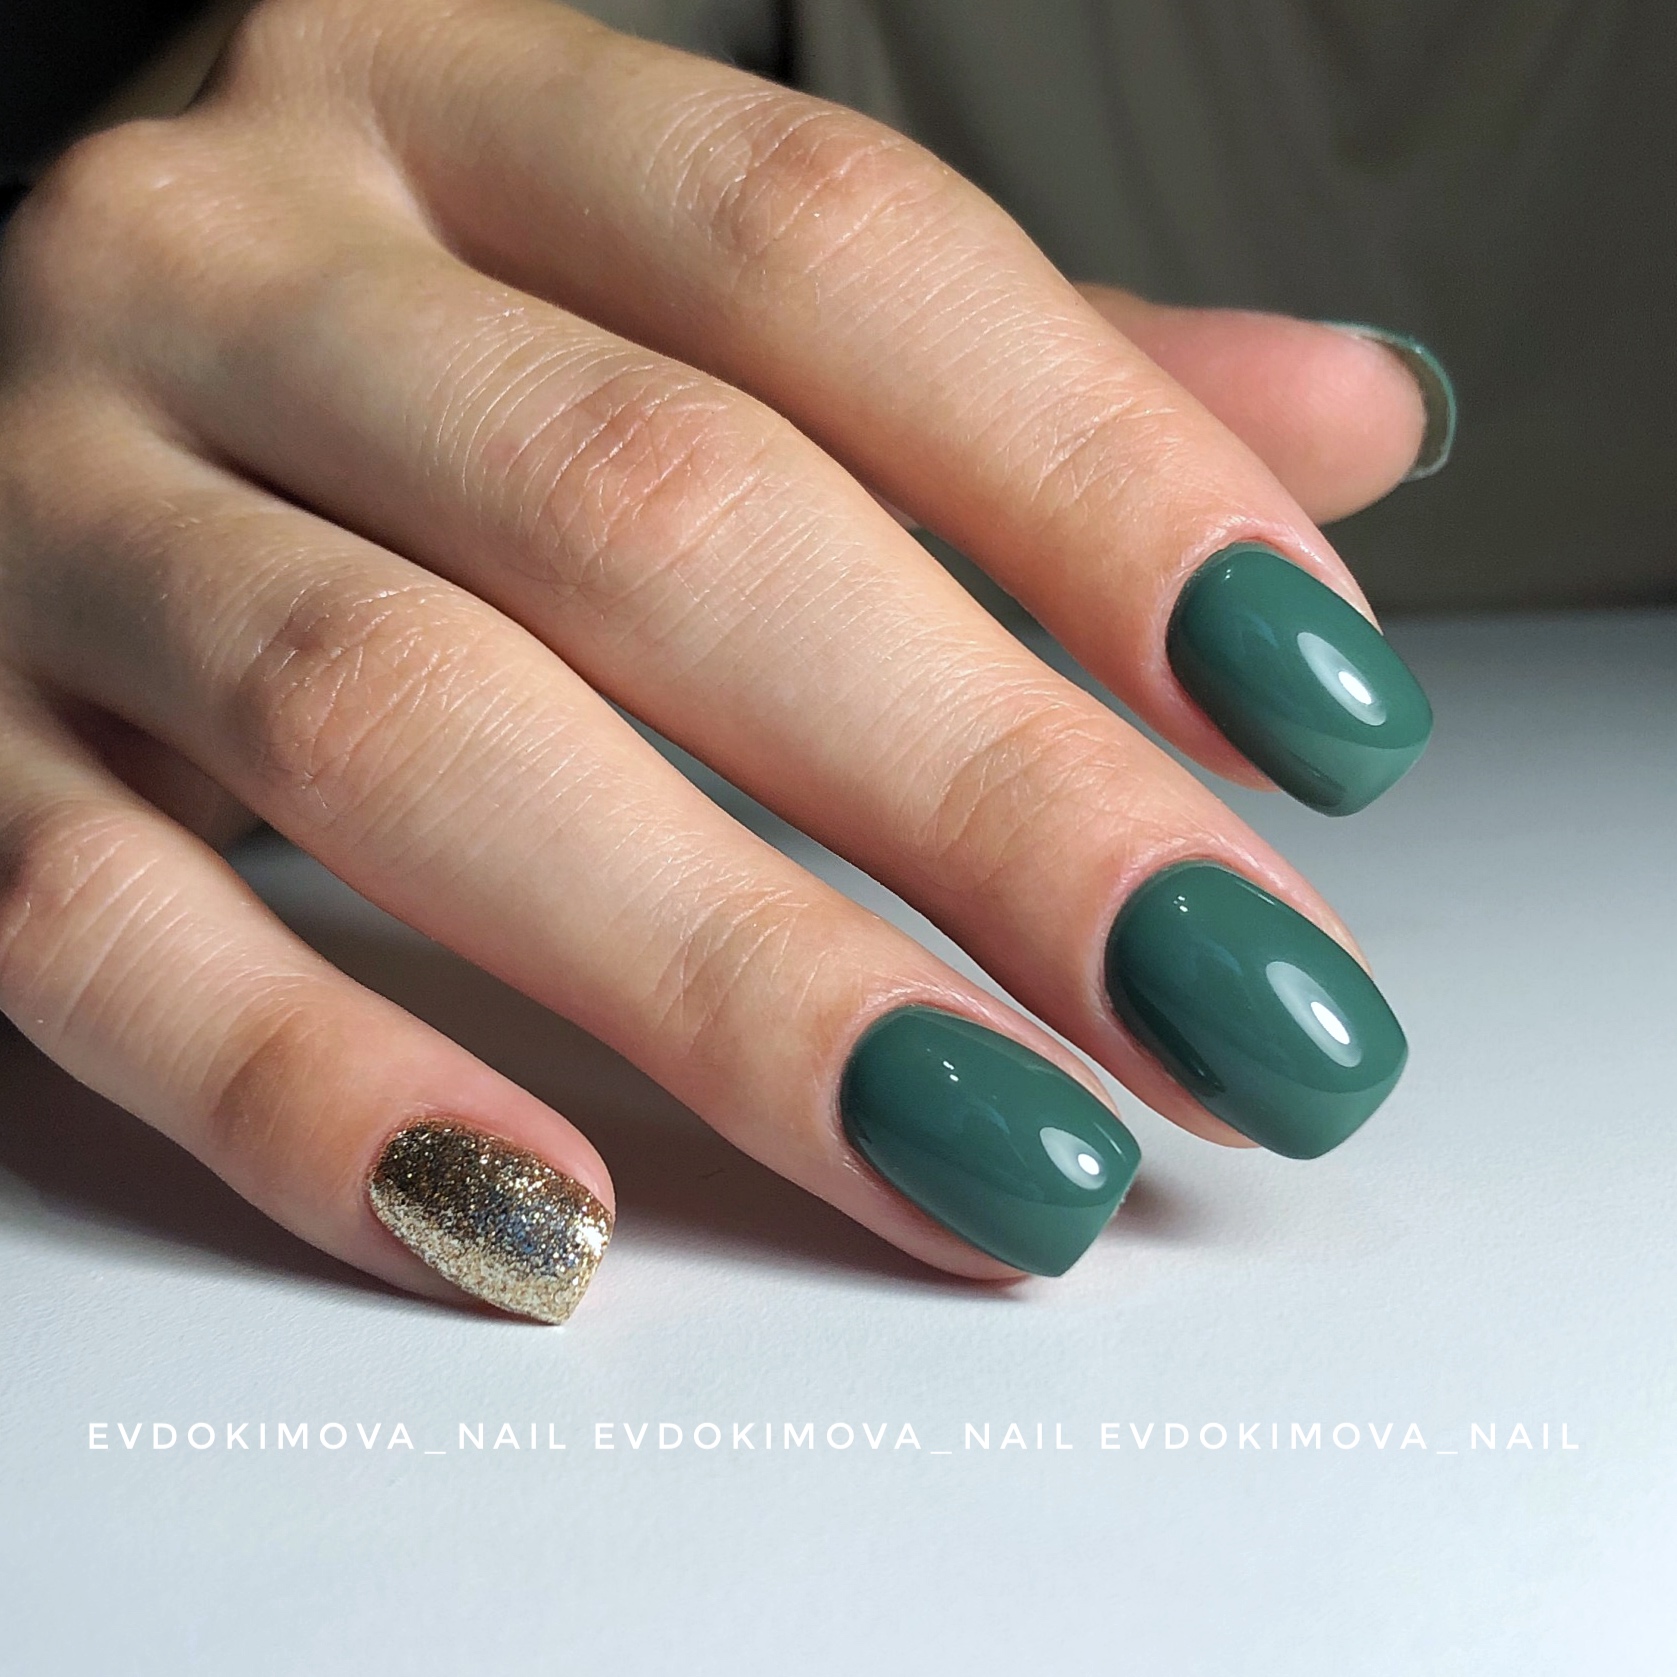 Маникюр с золотыми блестками в темно-зеленом цвете на короткие ногти.